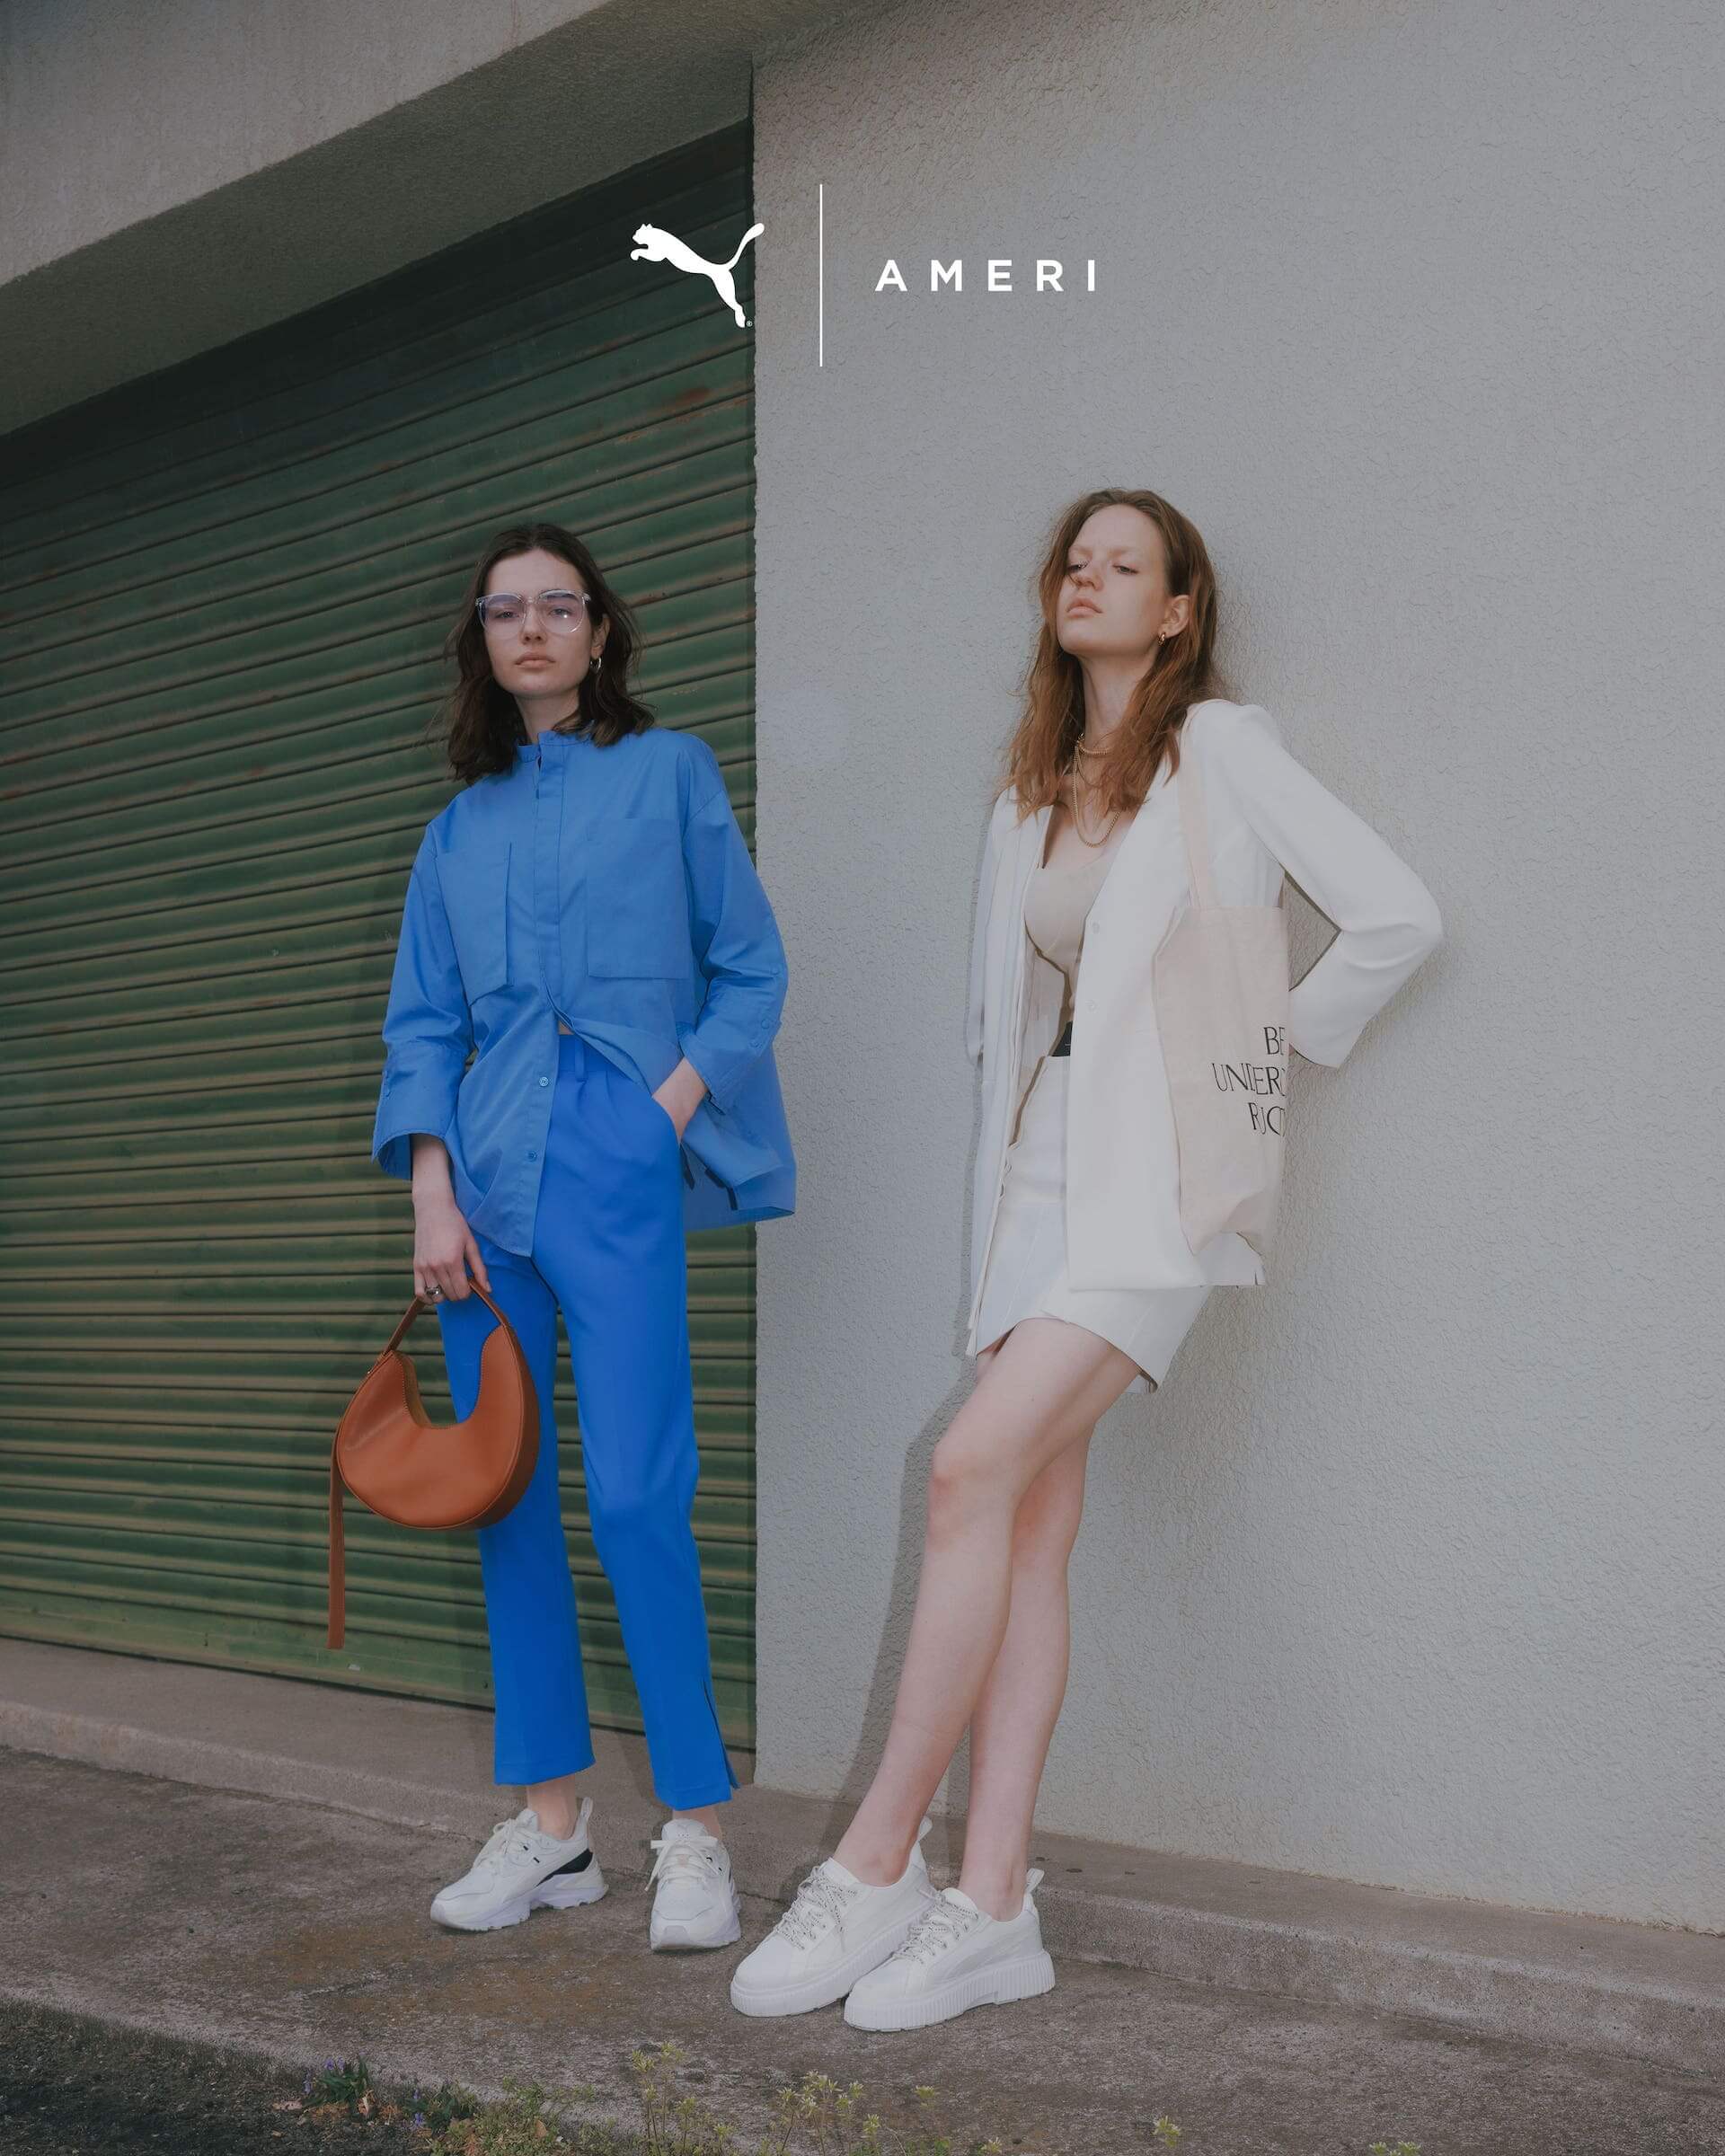 「PUMA x AMERI」初コラボレーションのフットウェアを発売｜全2モデルが4月13日より発売 fashion230403_puma_ameri-010